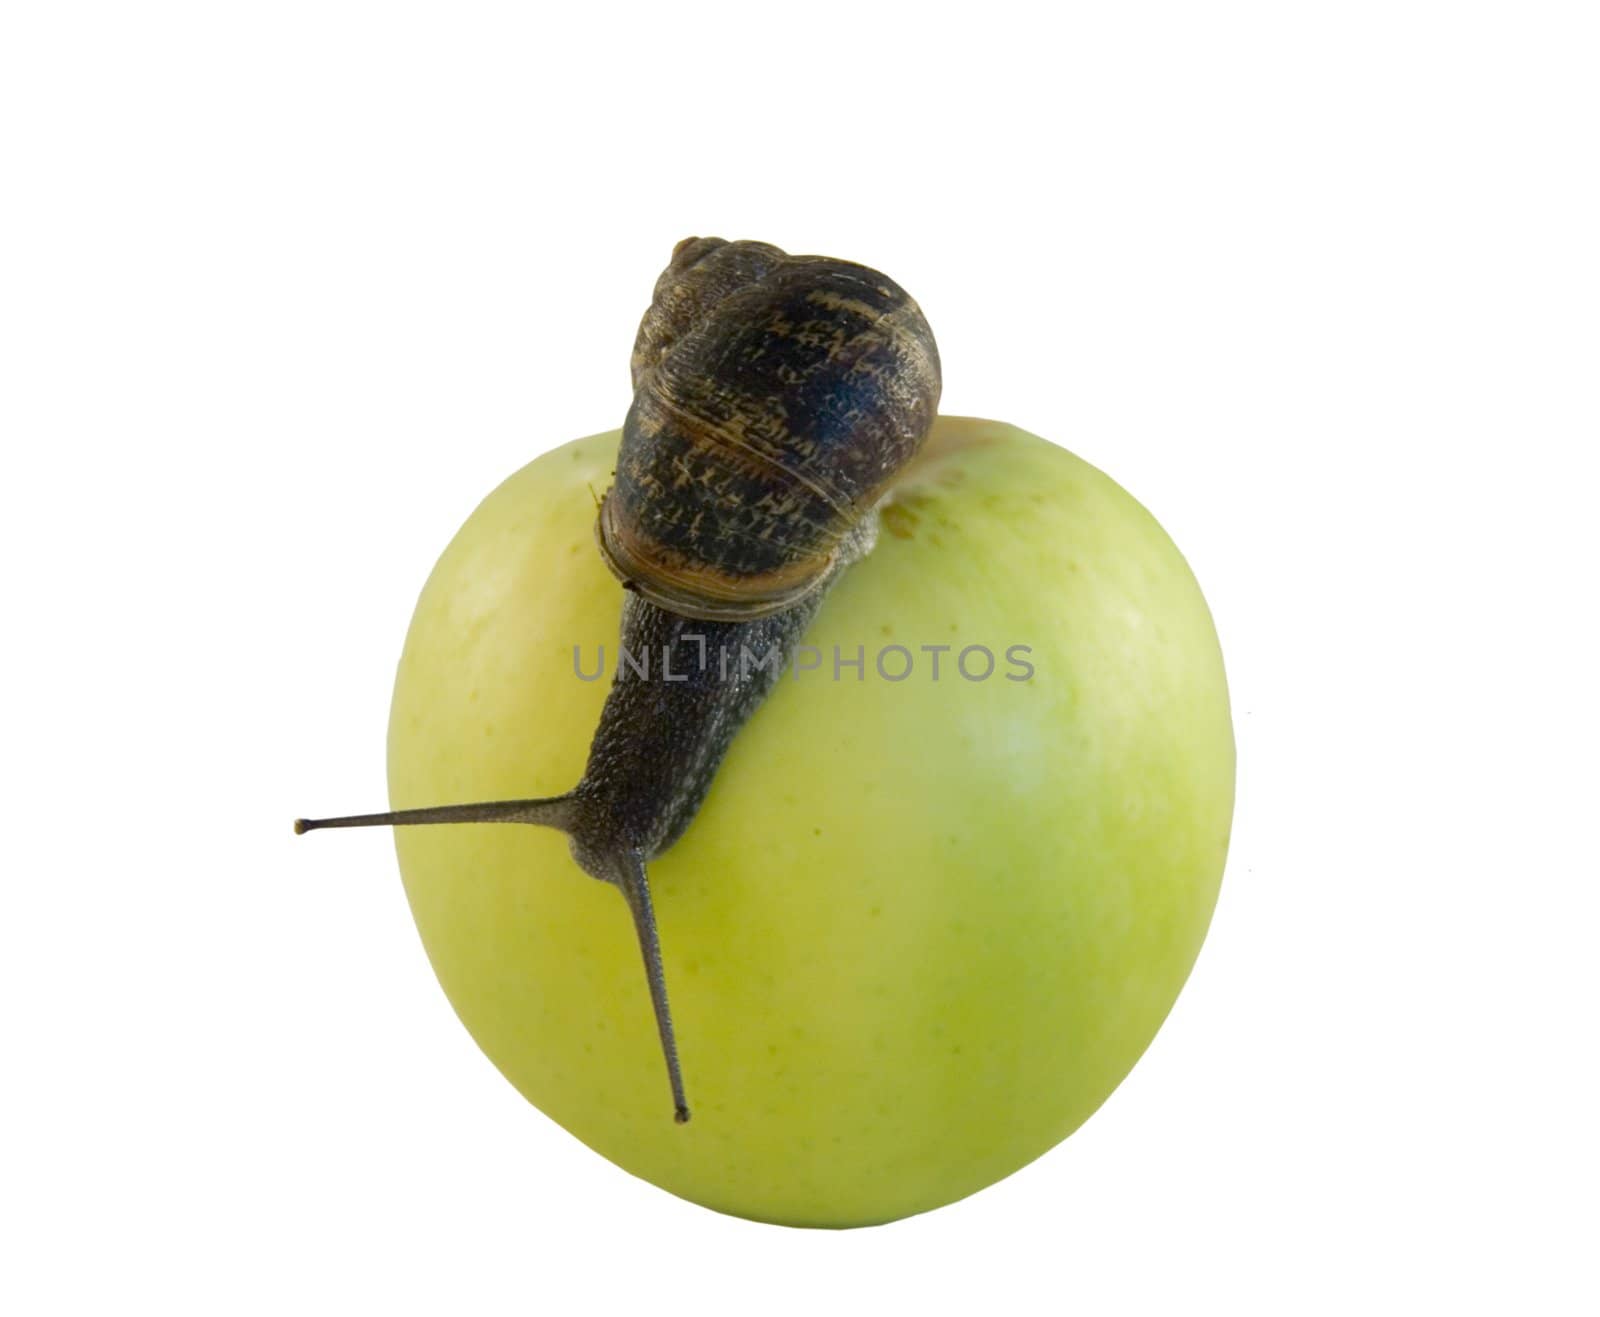 A snail crawls over a green apple